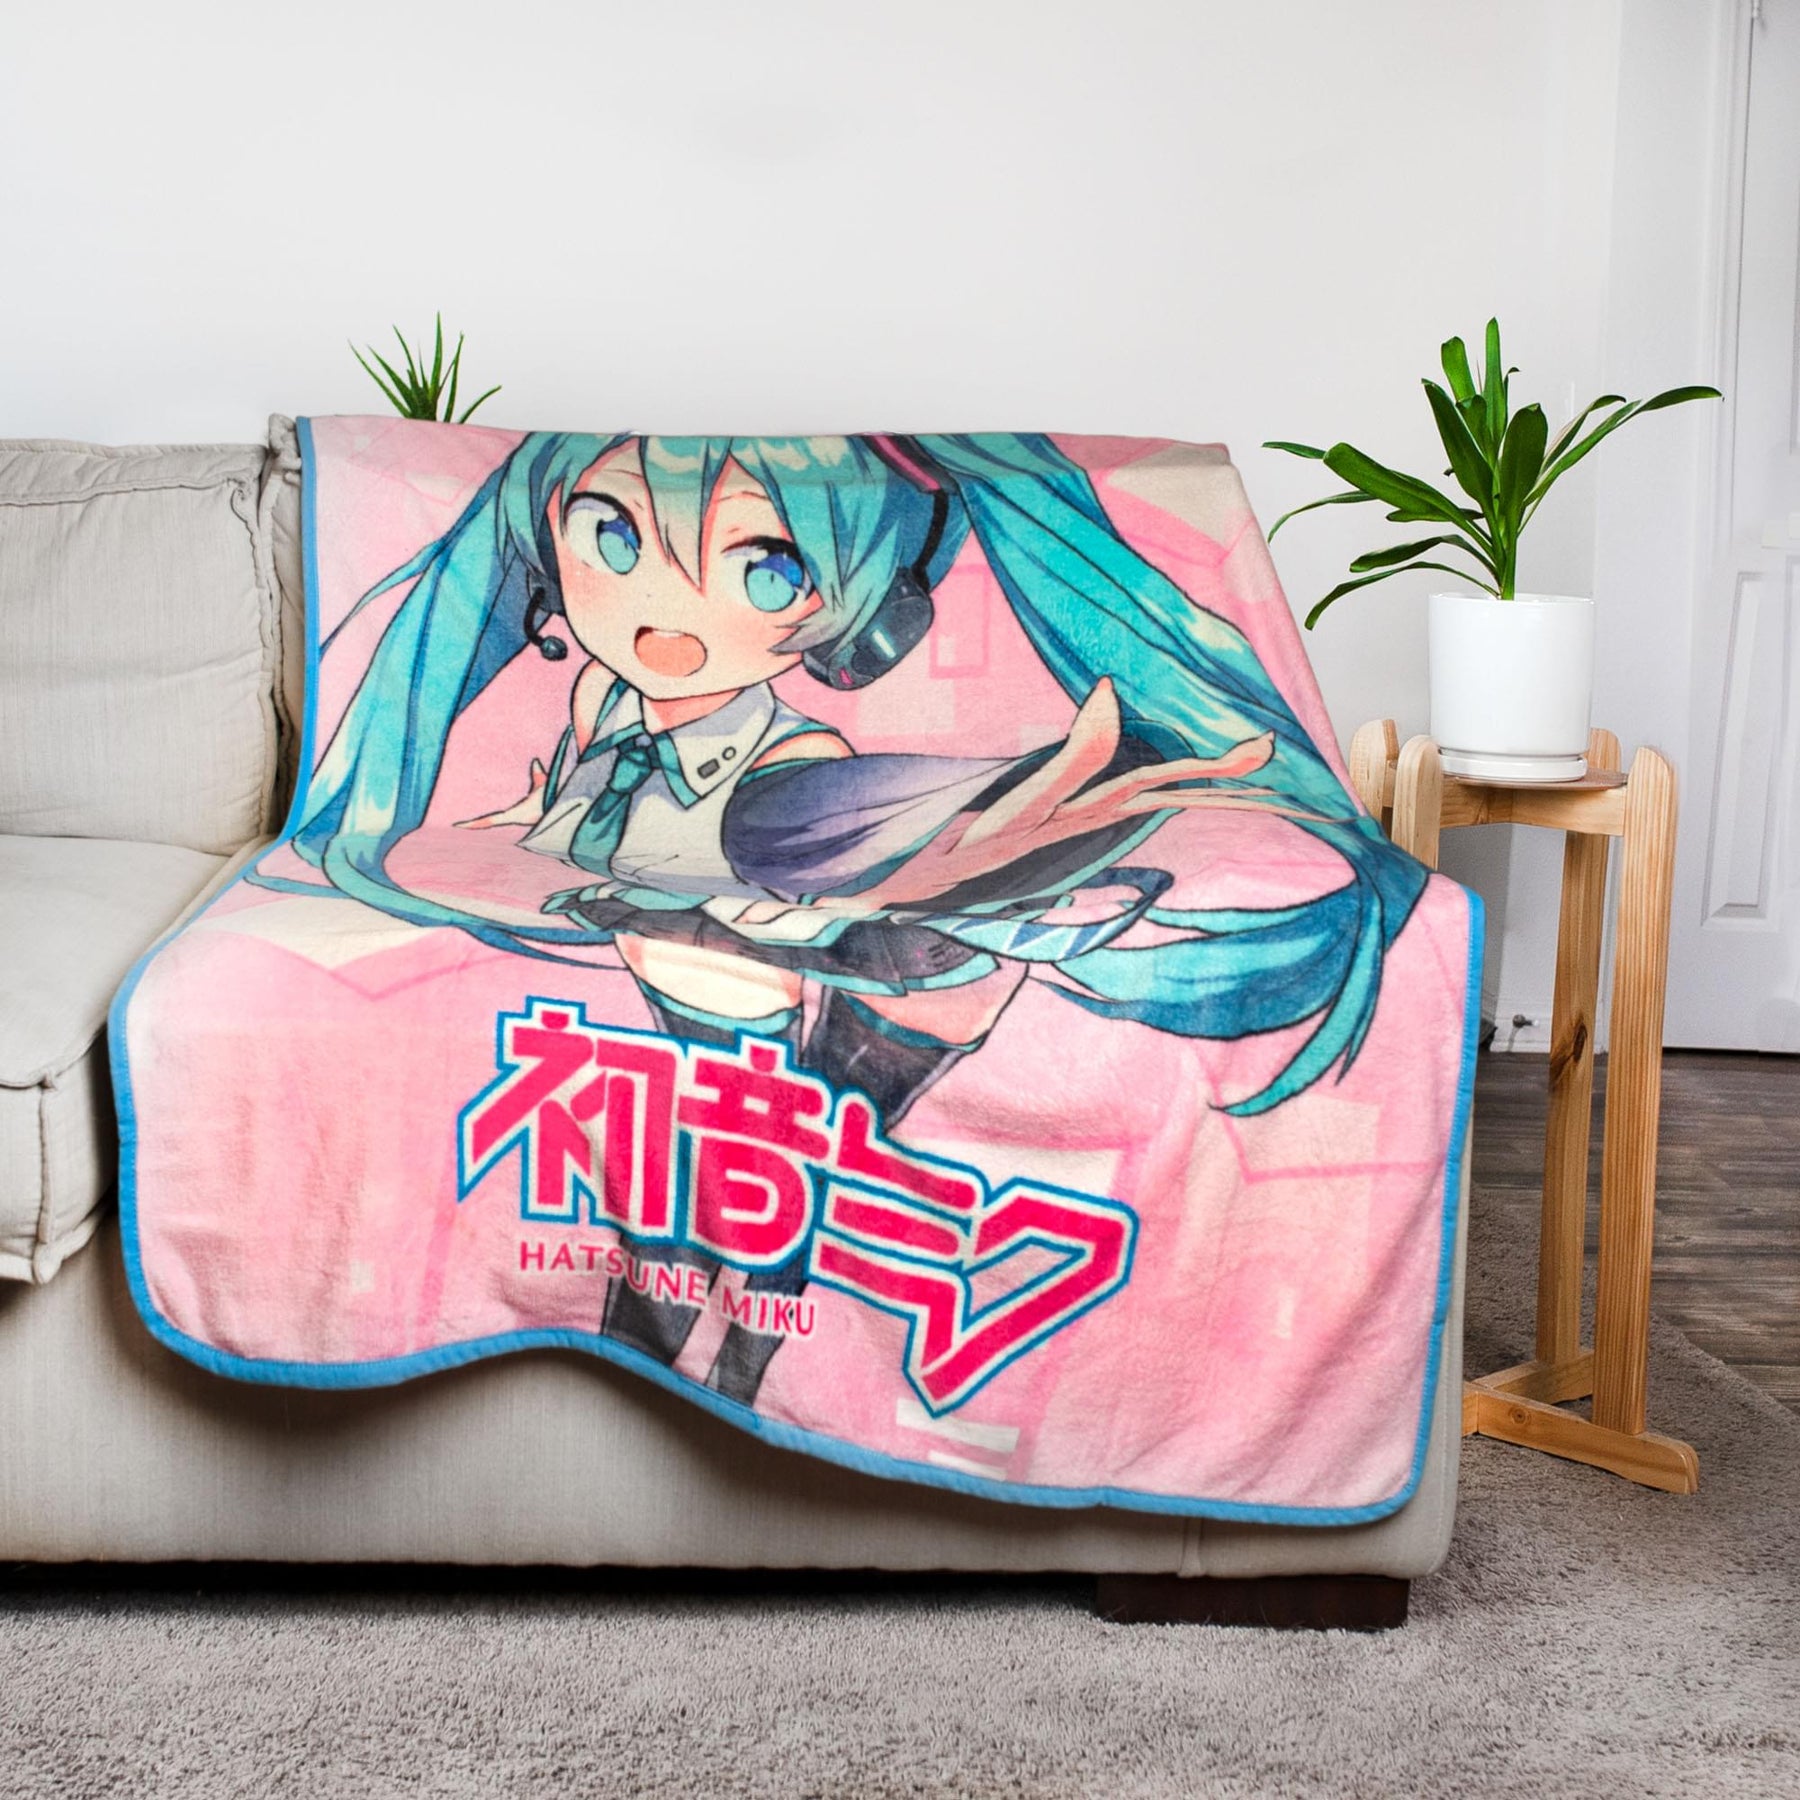 Hatsune Miku Crypton Voice Fleece Throw Blanket | 45 x 60 Inches